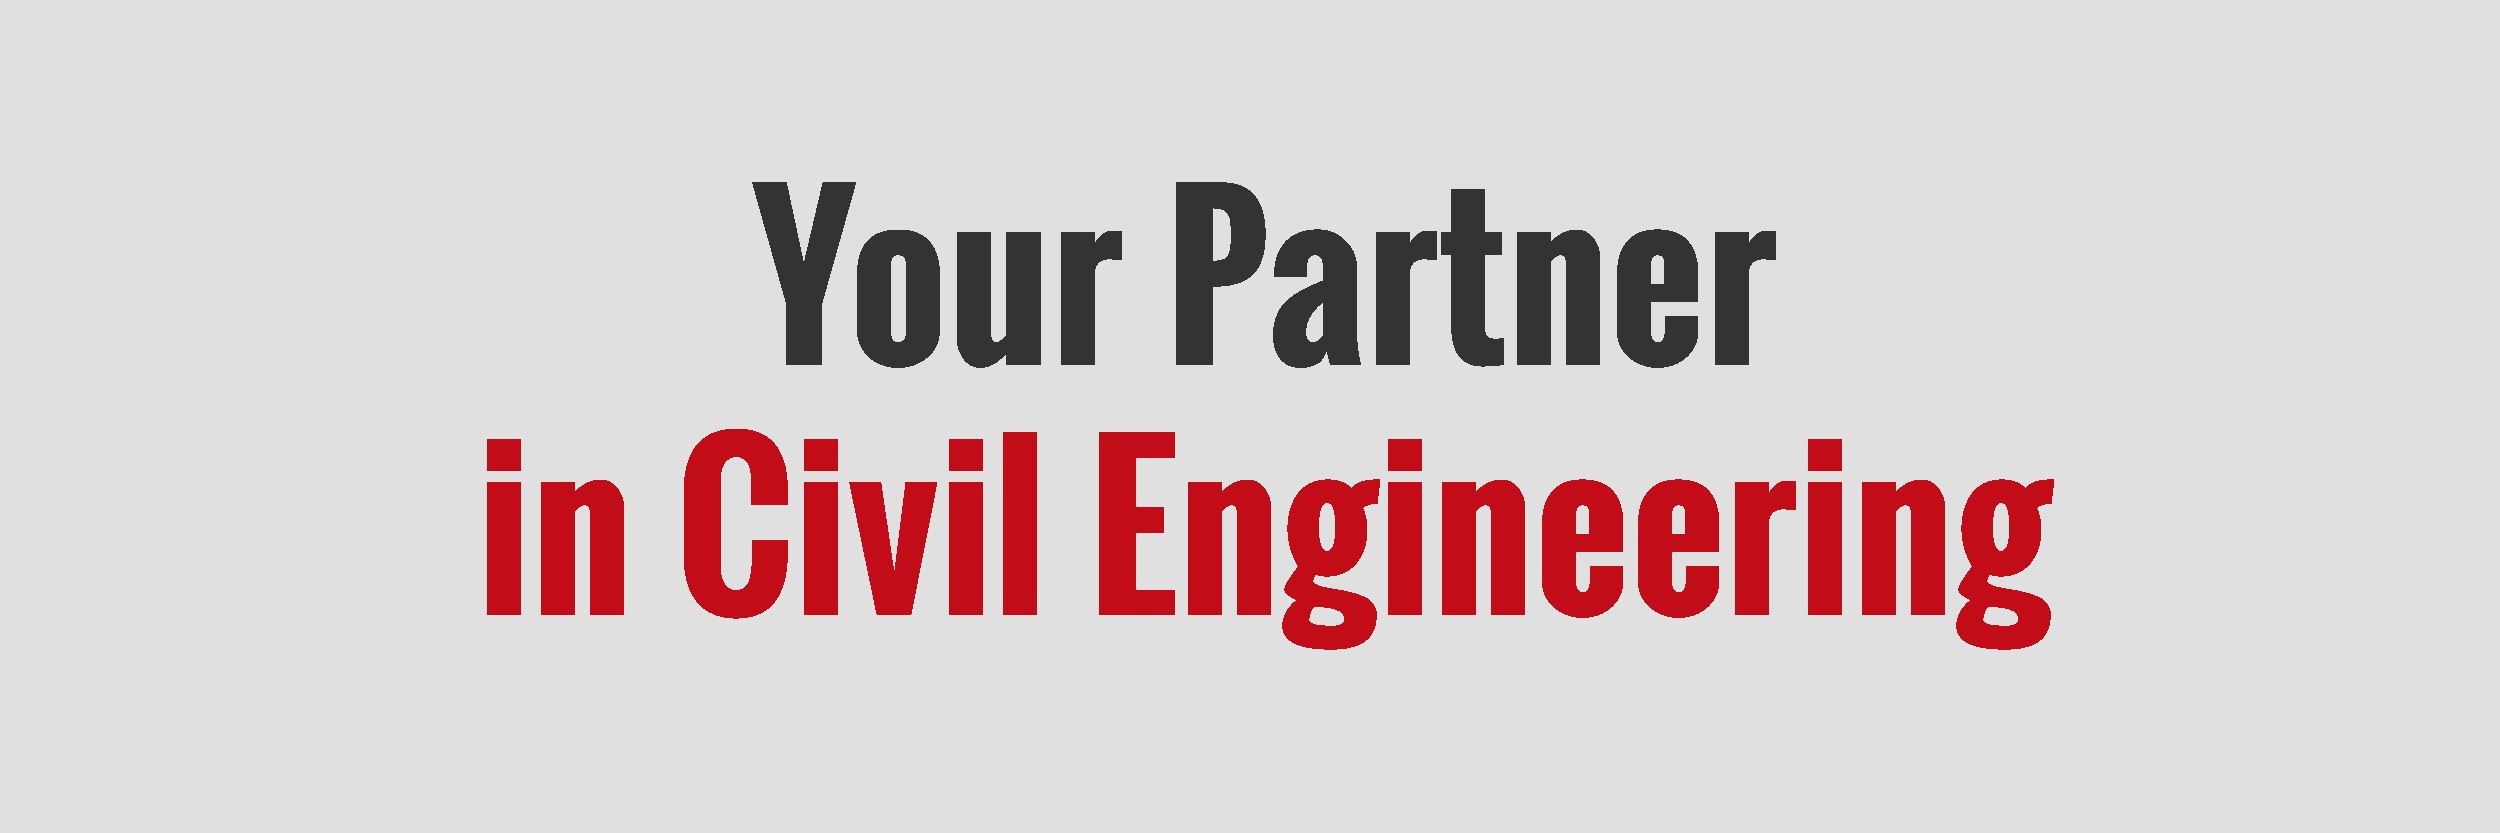 Your Partner in Civil Engineering